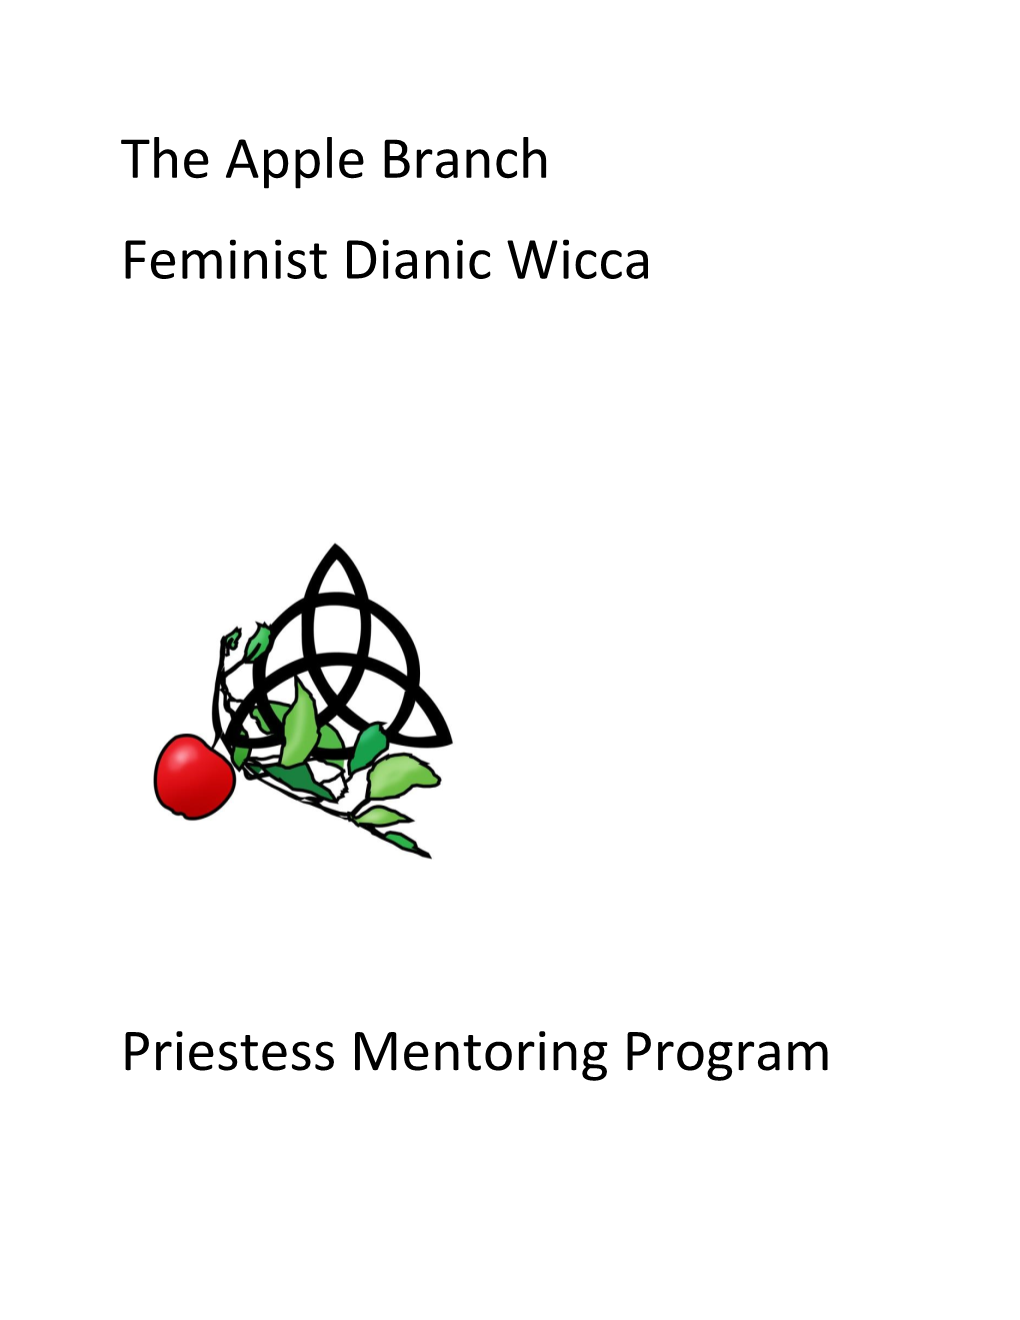 Priestess Mentoring Program Overview